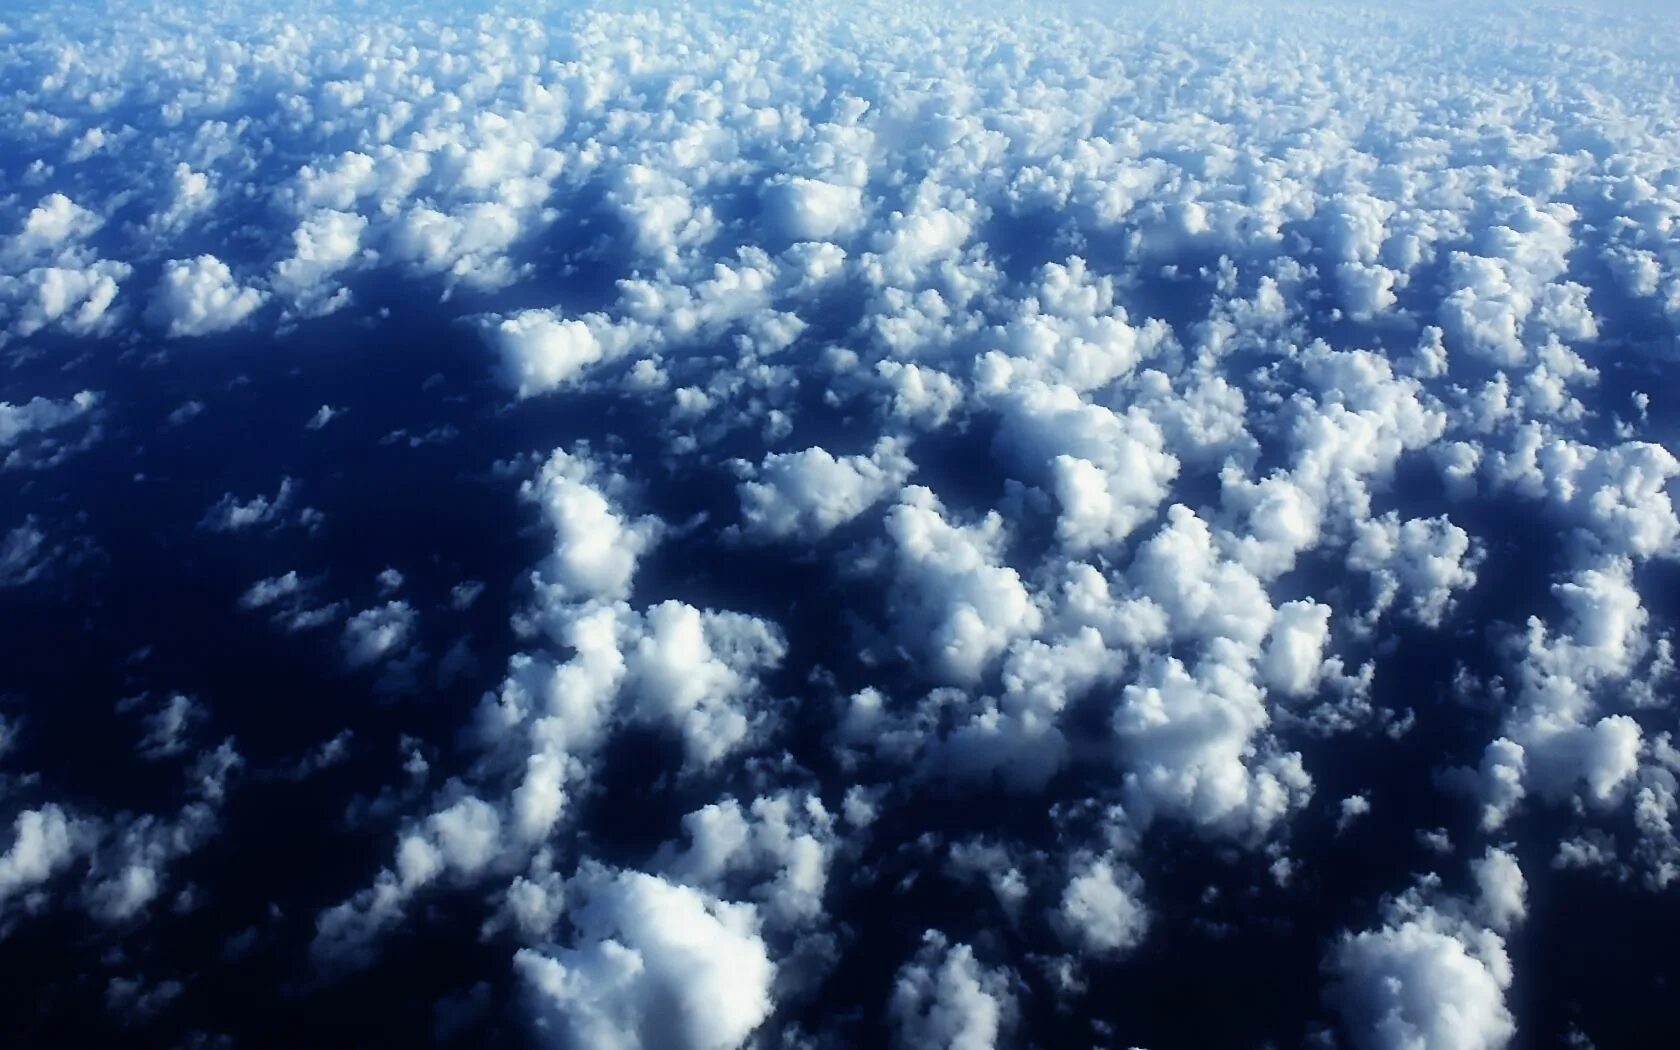 Cloud desktops. Облака. Небо вид сверху. Облака сверху. Тучи сверху.